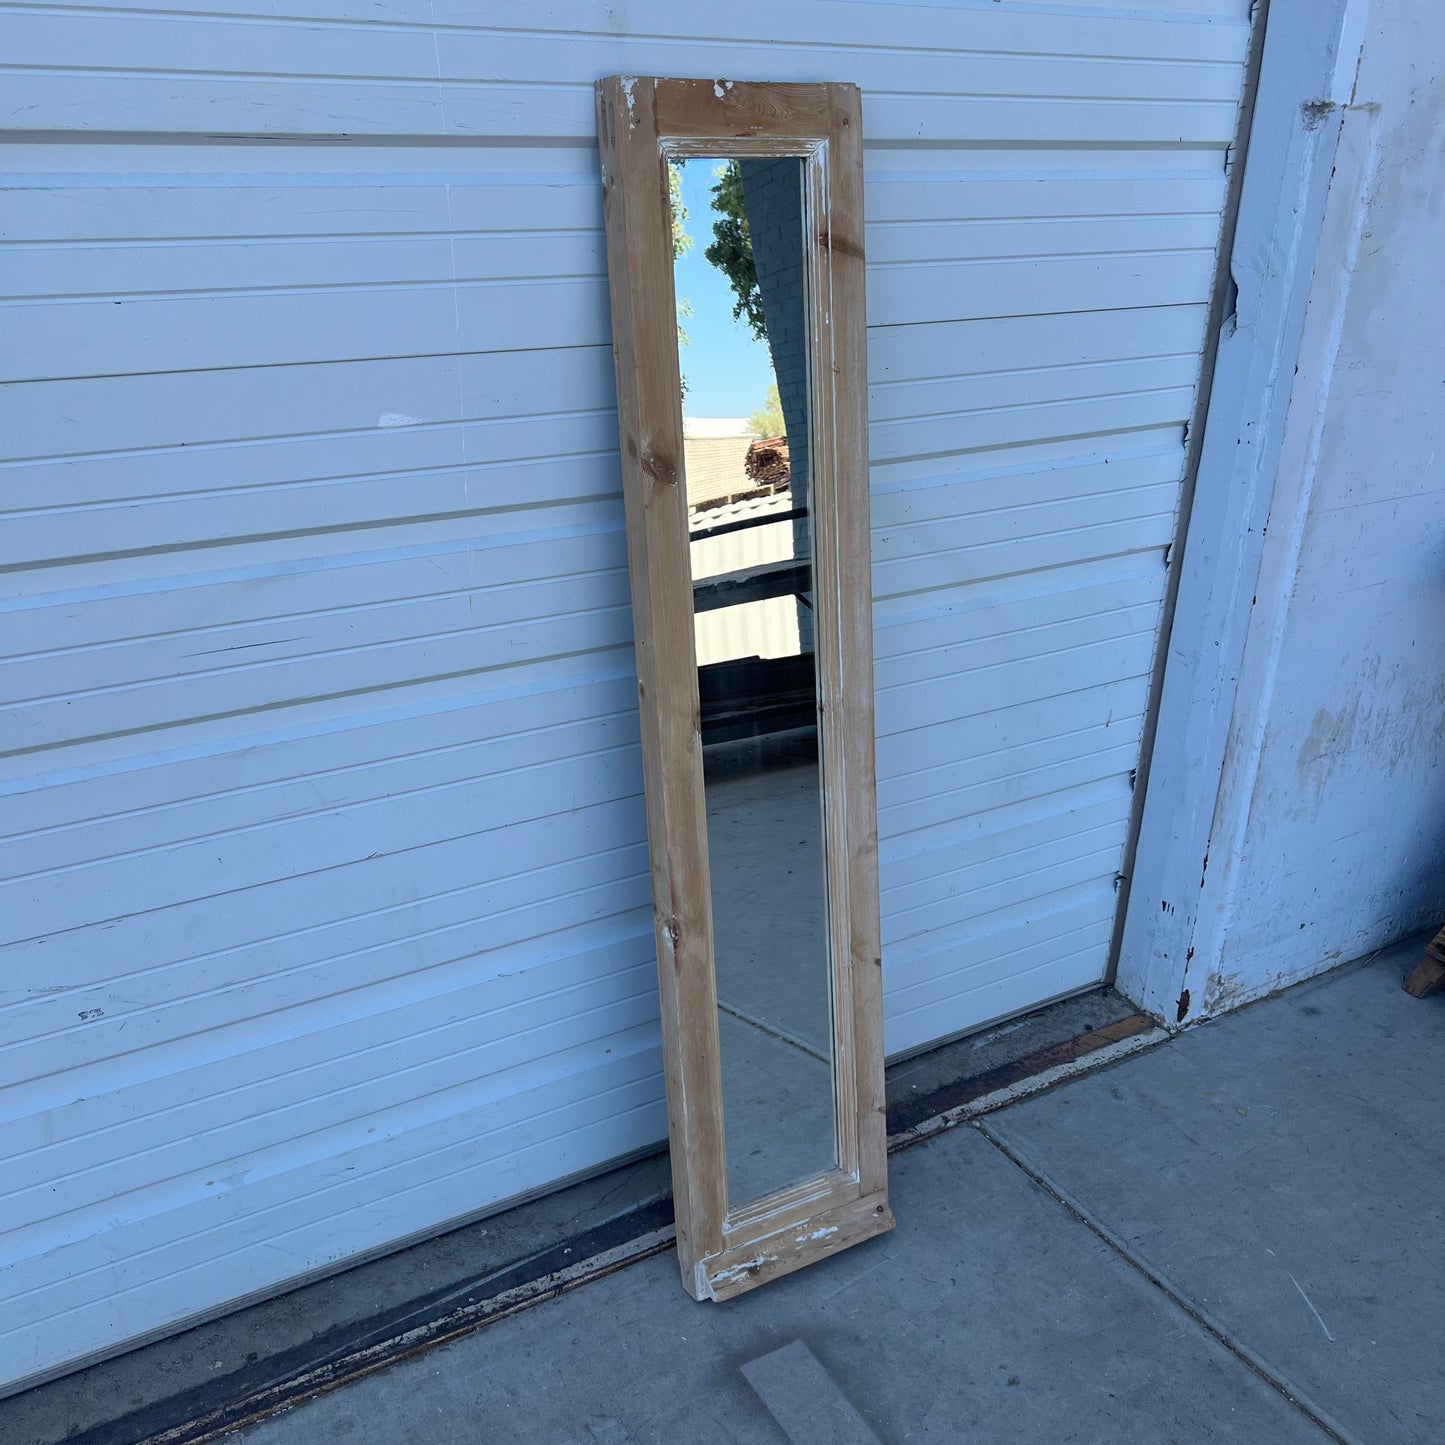 Wood Framed Rectangle Mirror